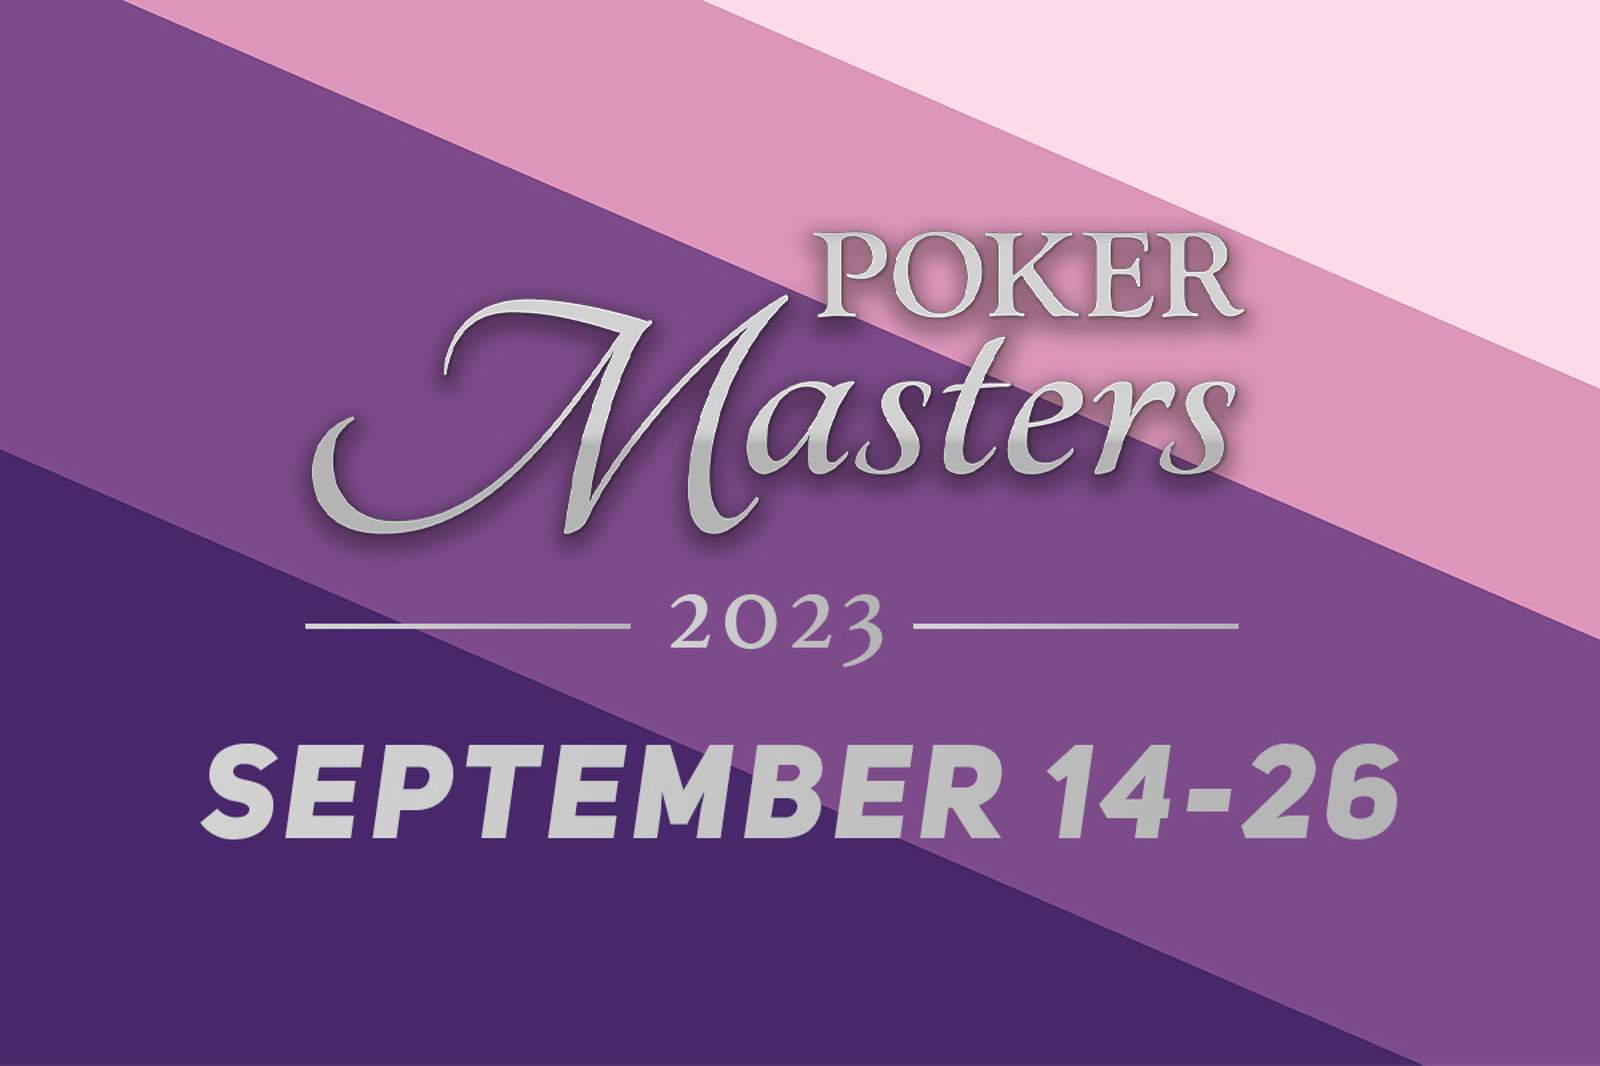 Poker Masters Schedule: September 14-26